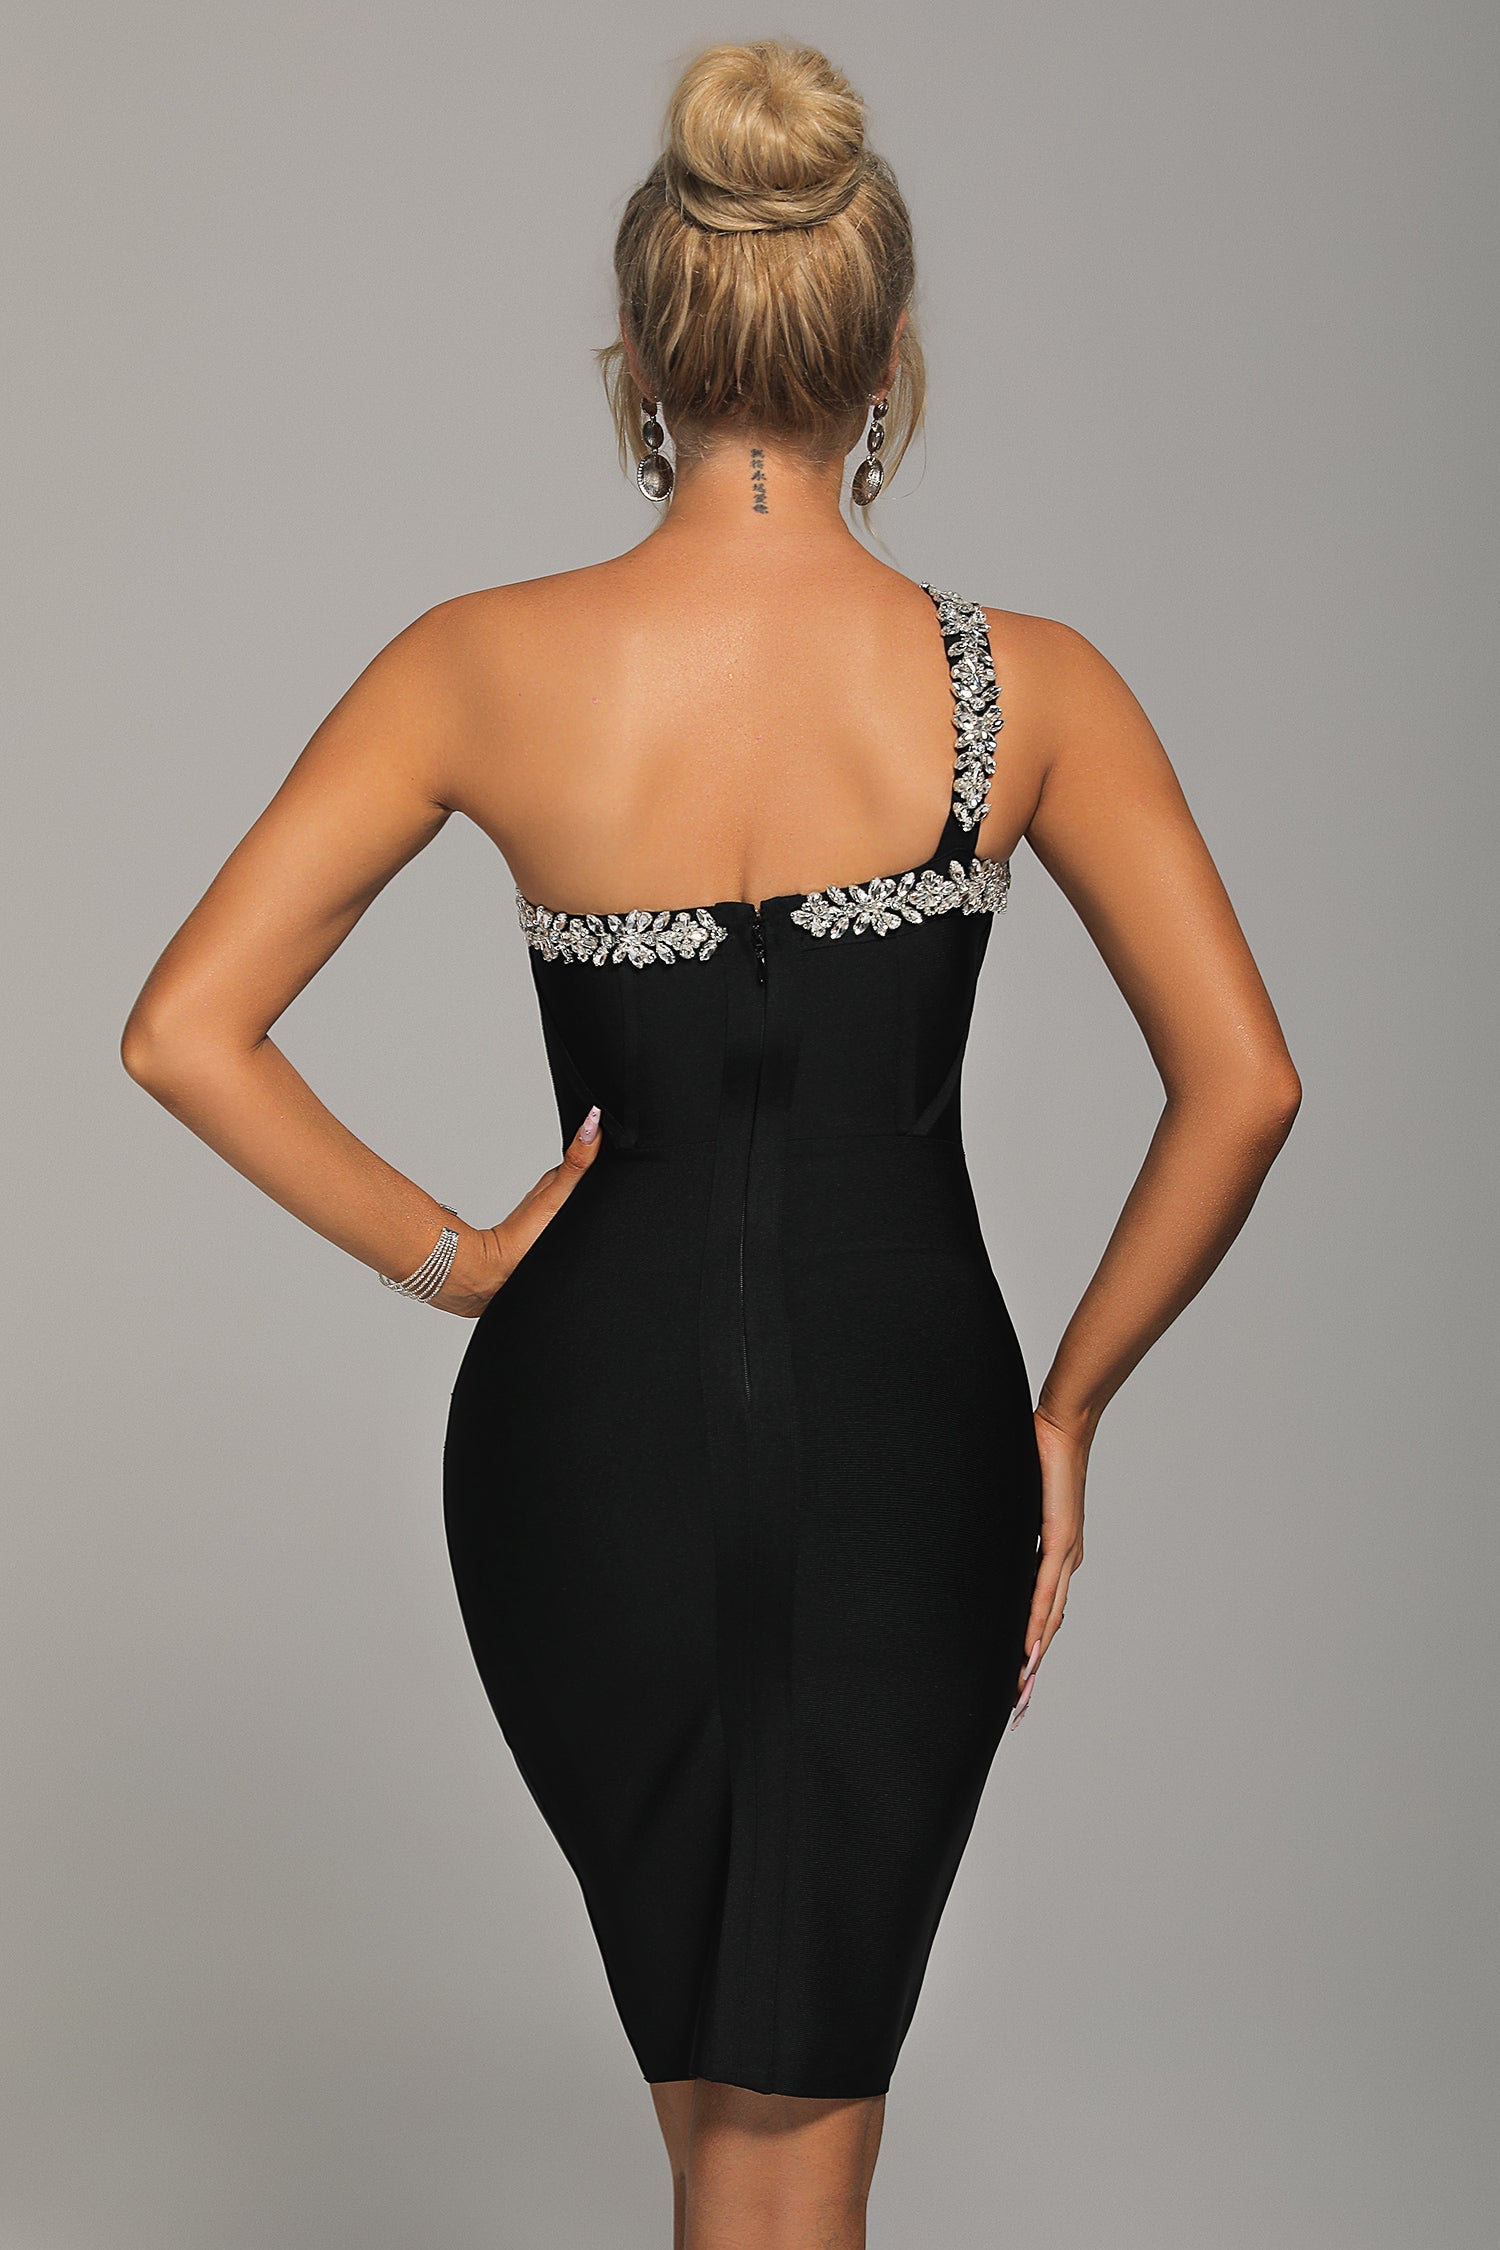 Hanny Crystal Cocktail Dress - Black